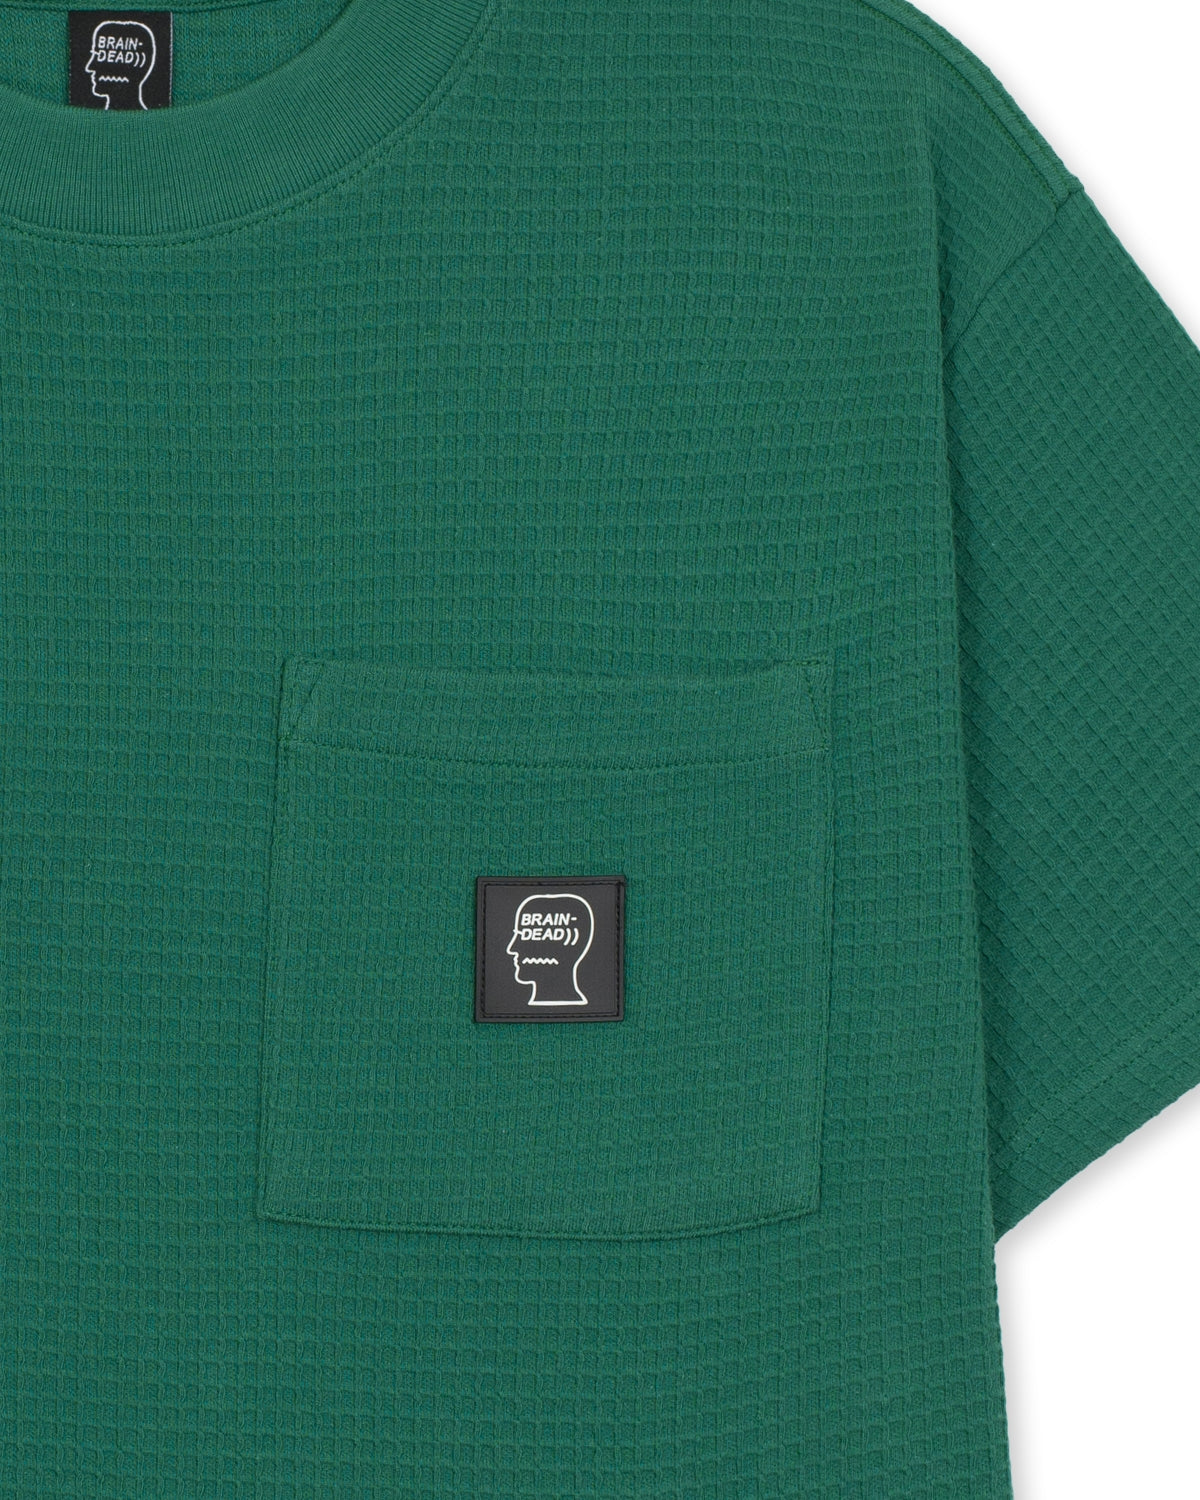 Waffle Knit Mockneck Pocket Shirt W/ PVS - Emerald 3